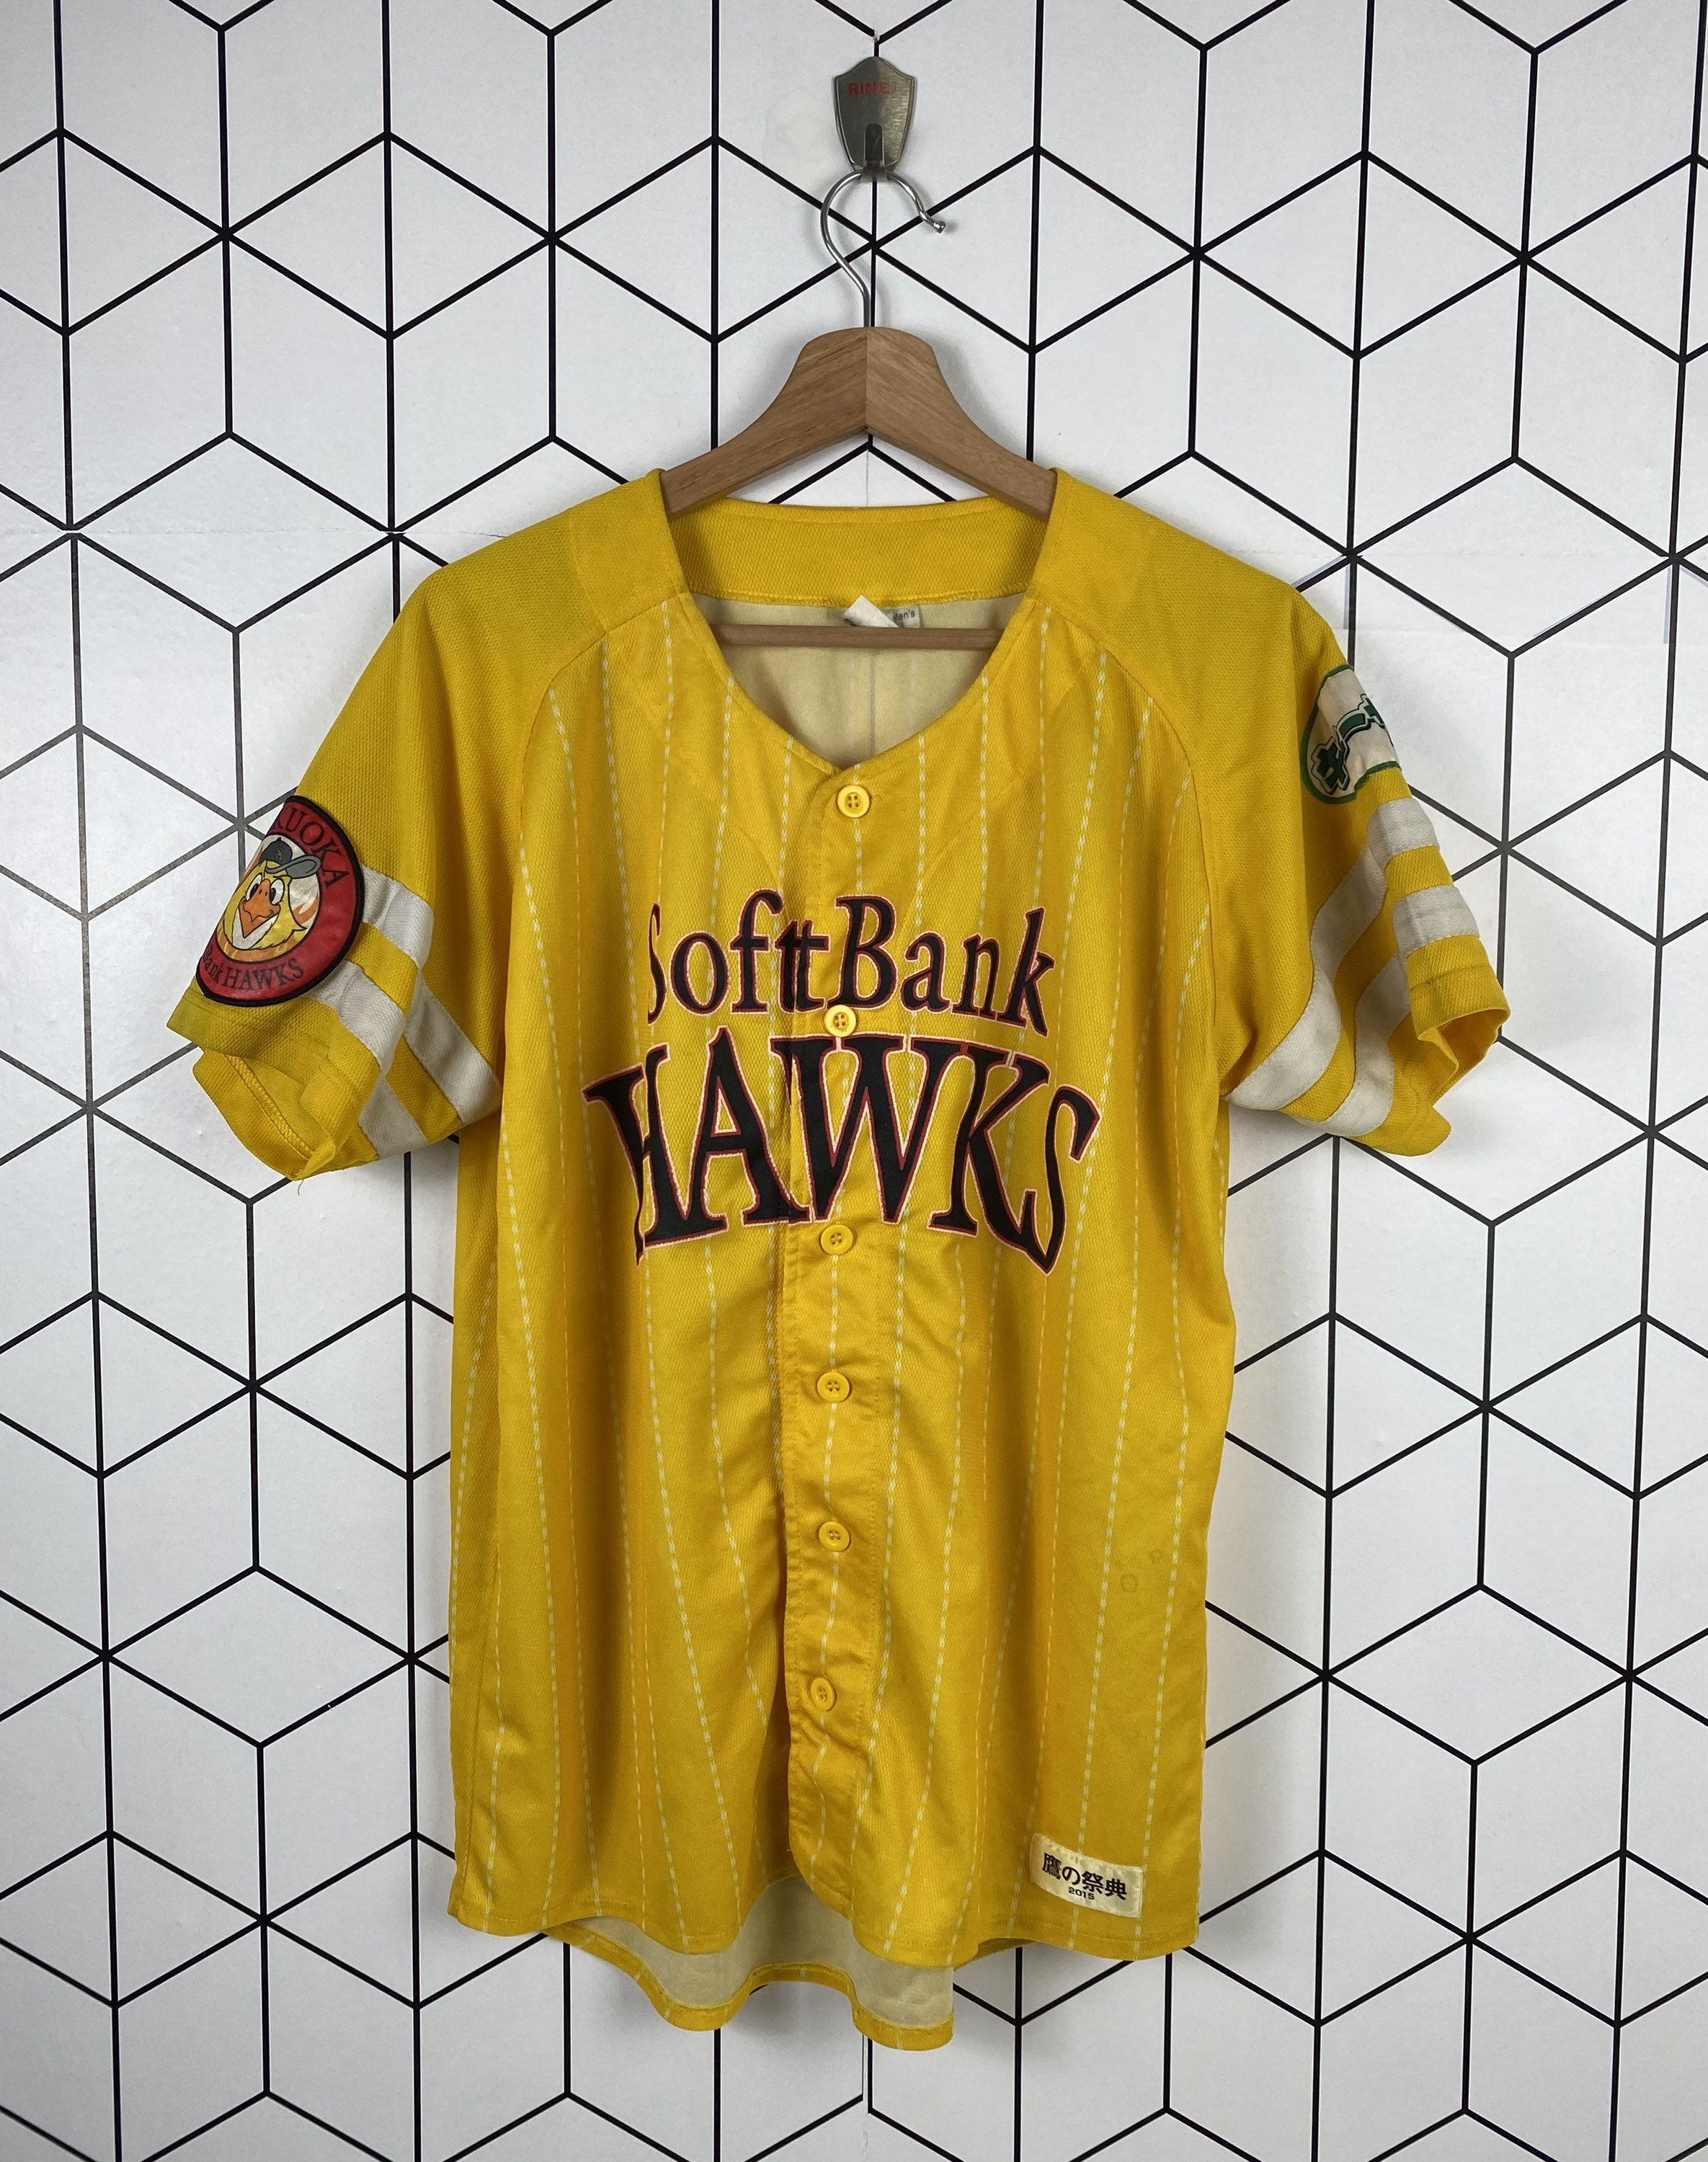 Vintage Fukuoka Softbank Hawks Japanese Professional Baseball 